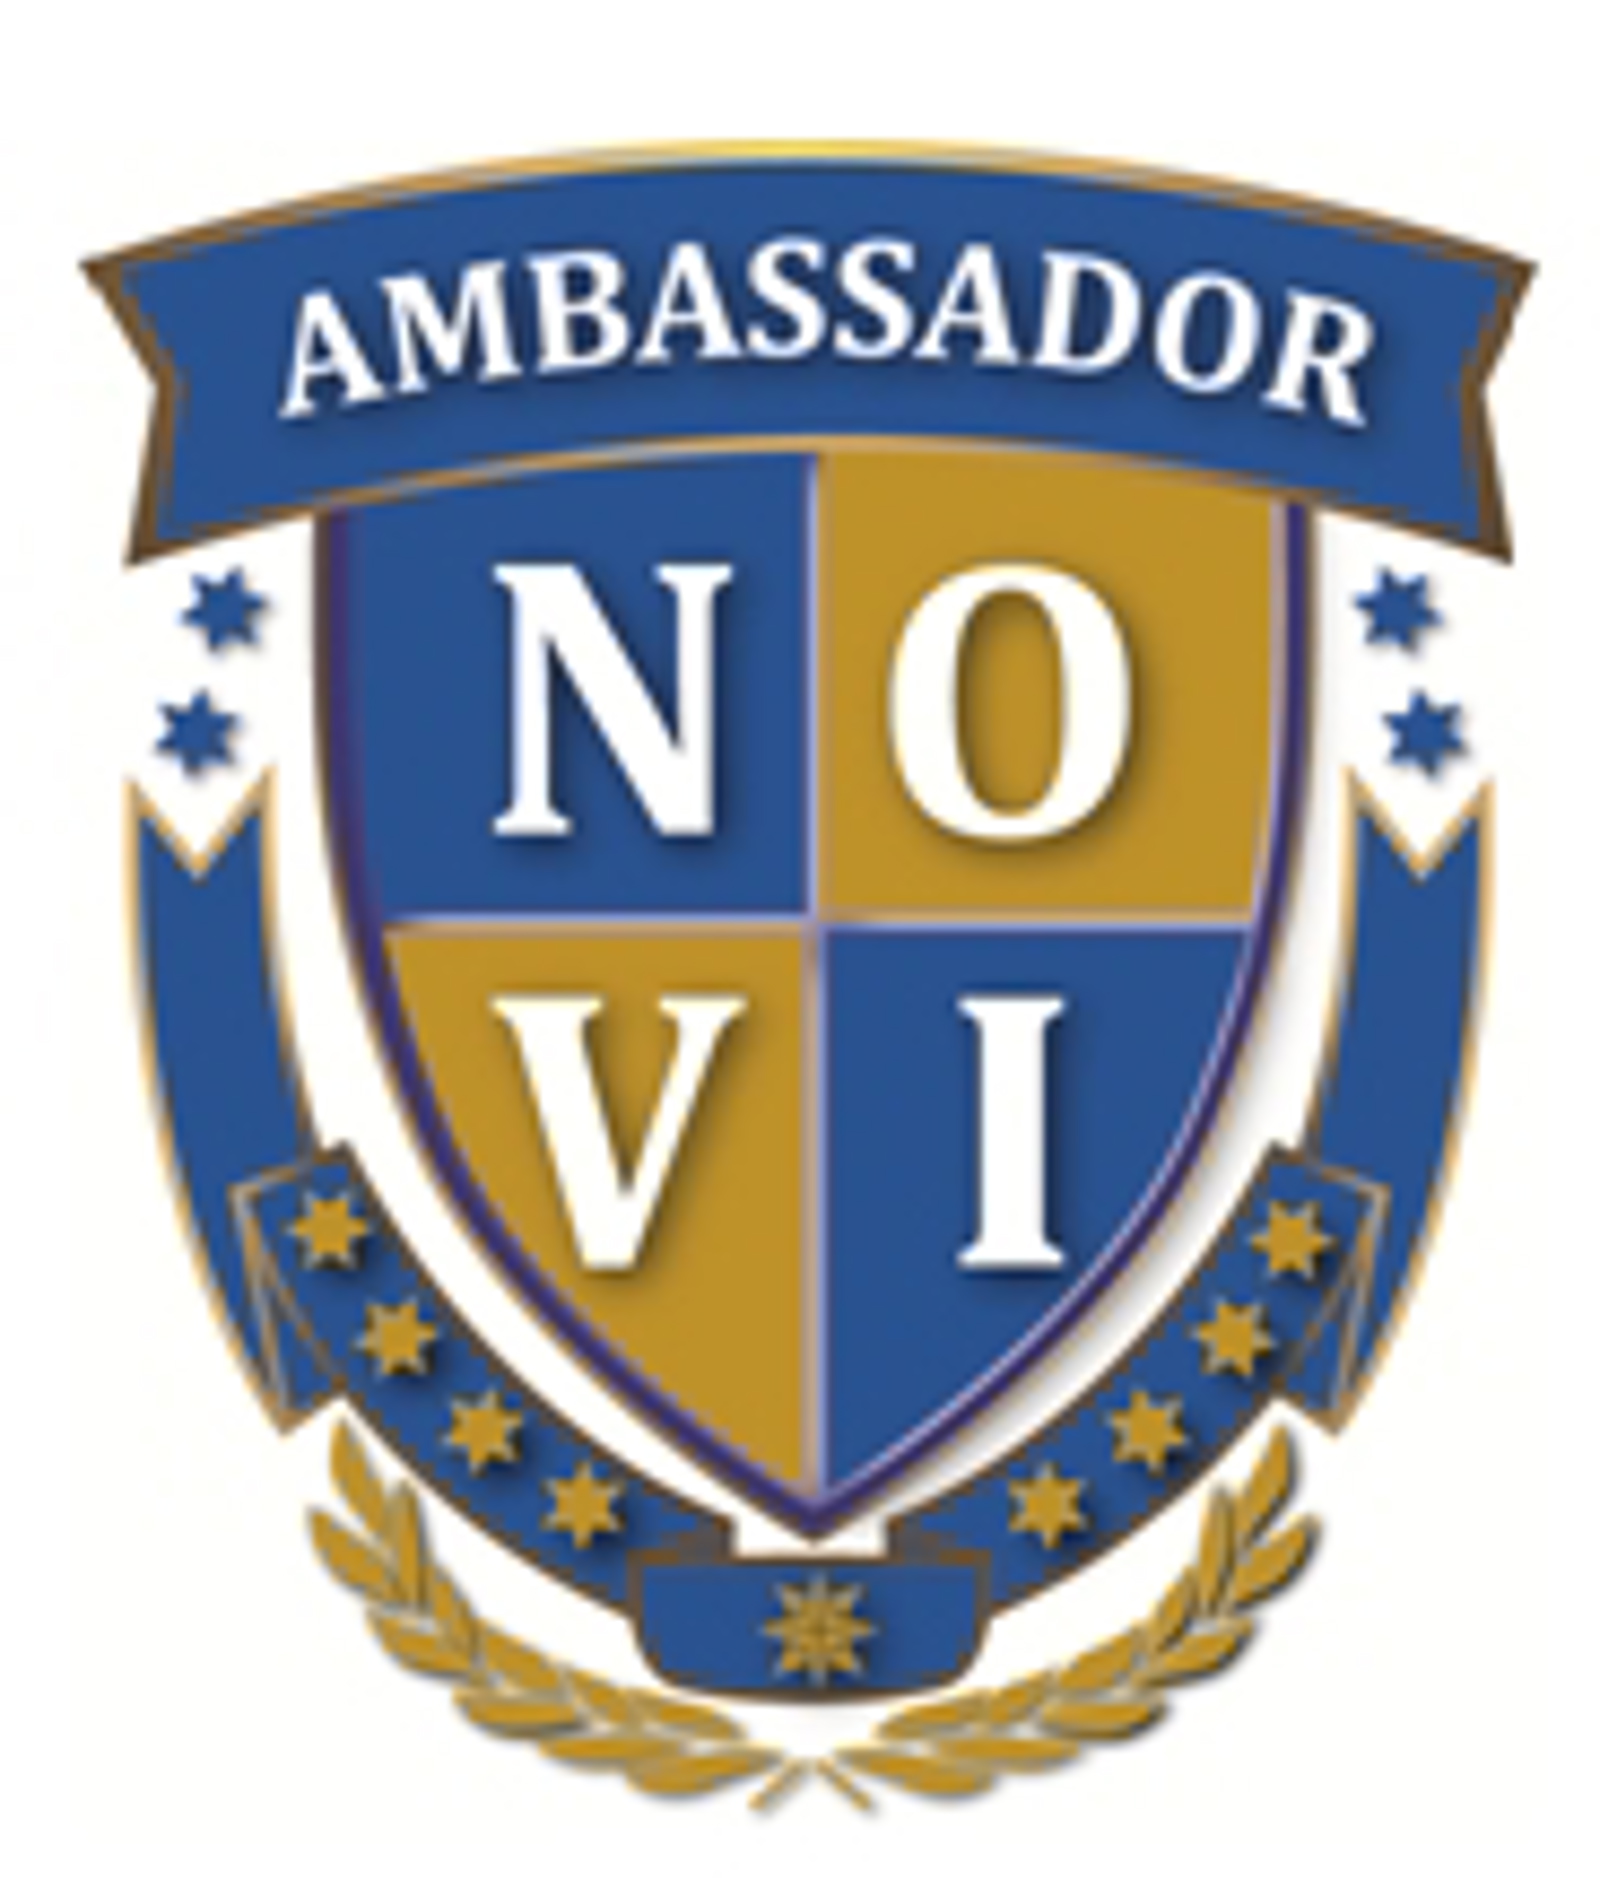 Ambassador Academy